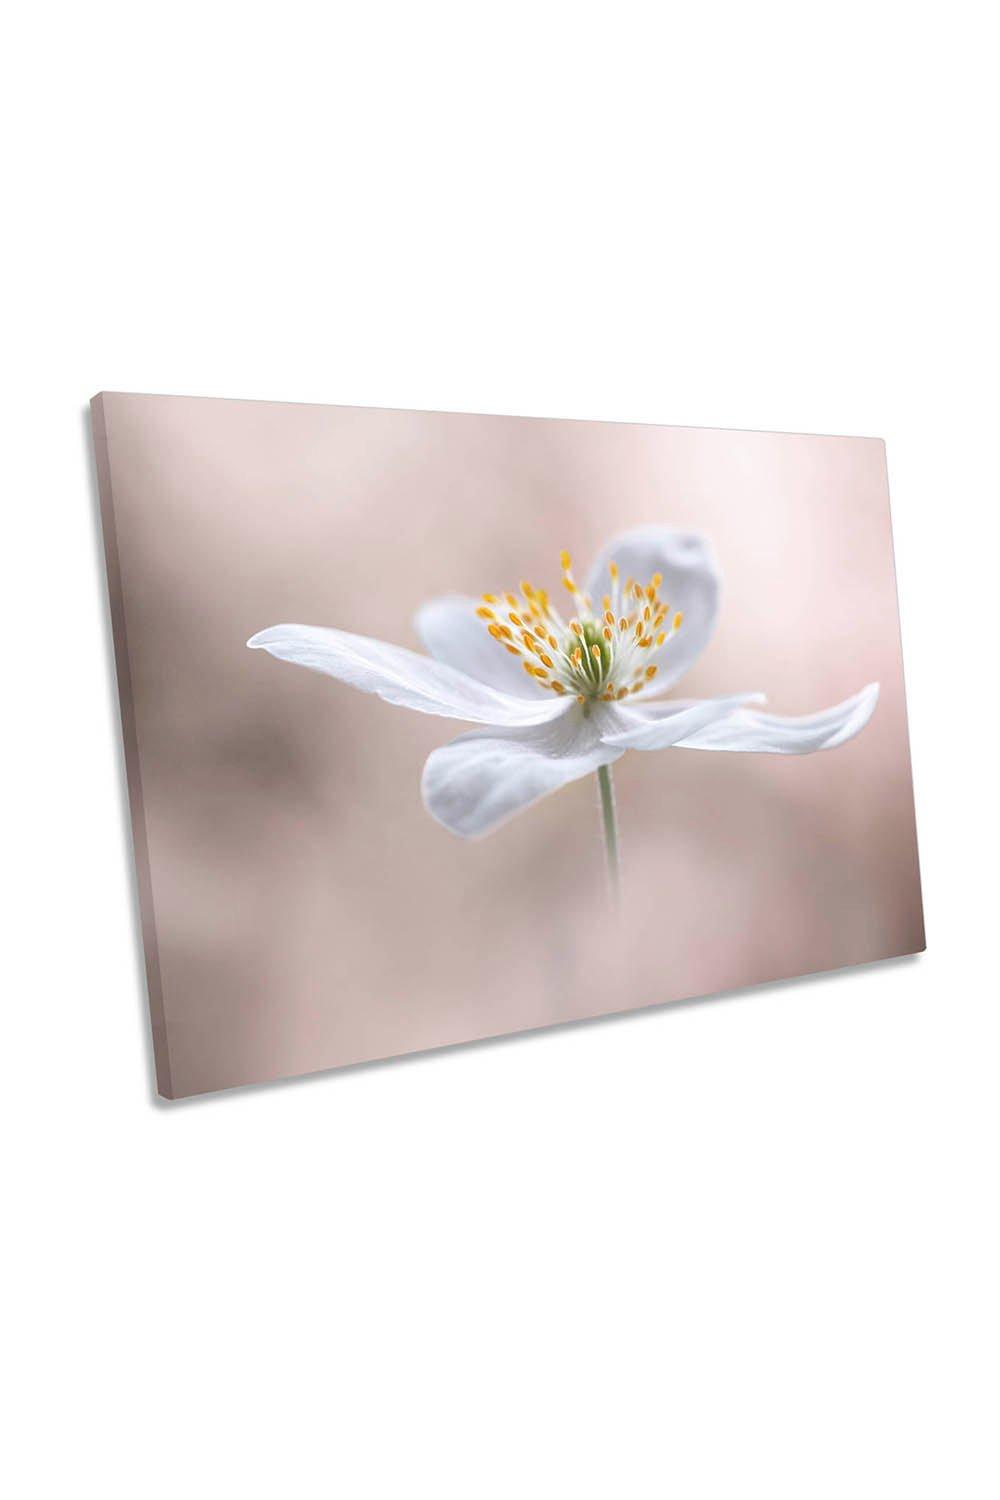 Anemone Nemorosa White Flower Canvas Wall Art Picture Print